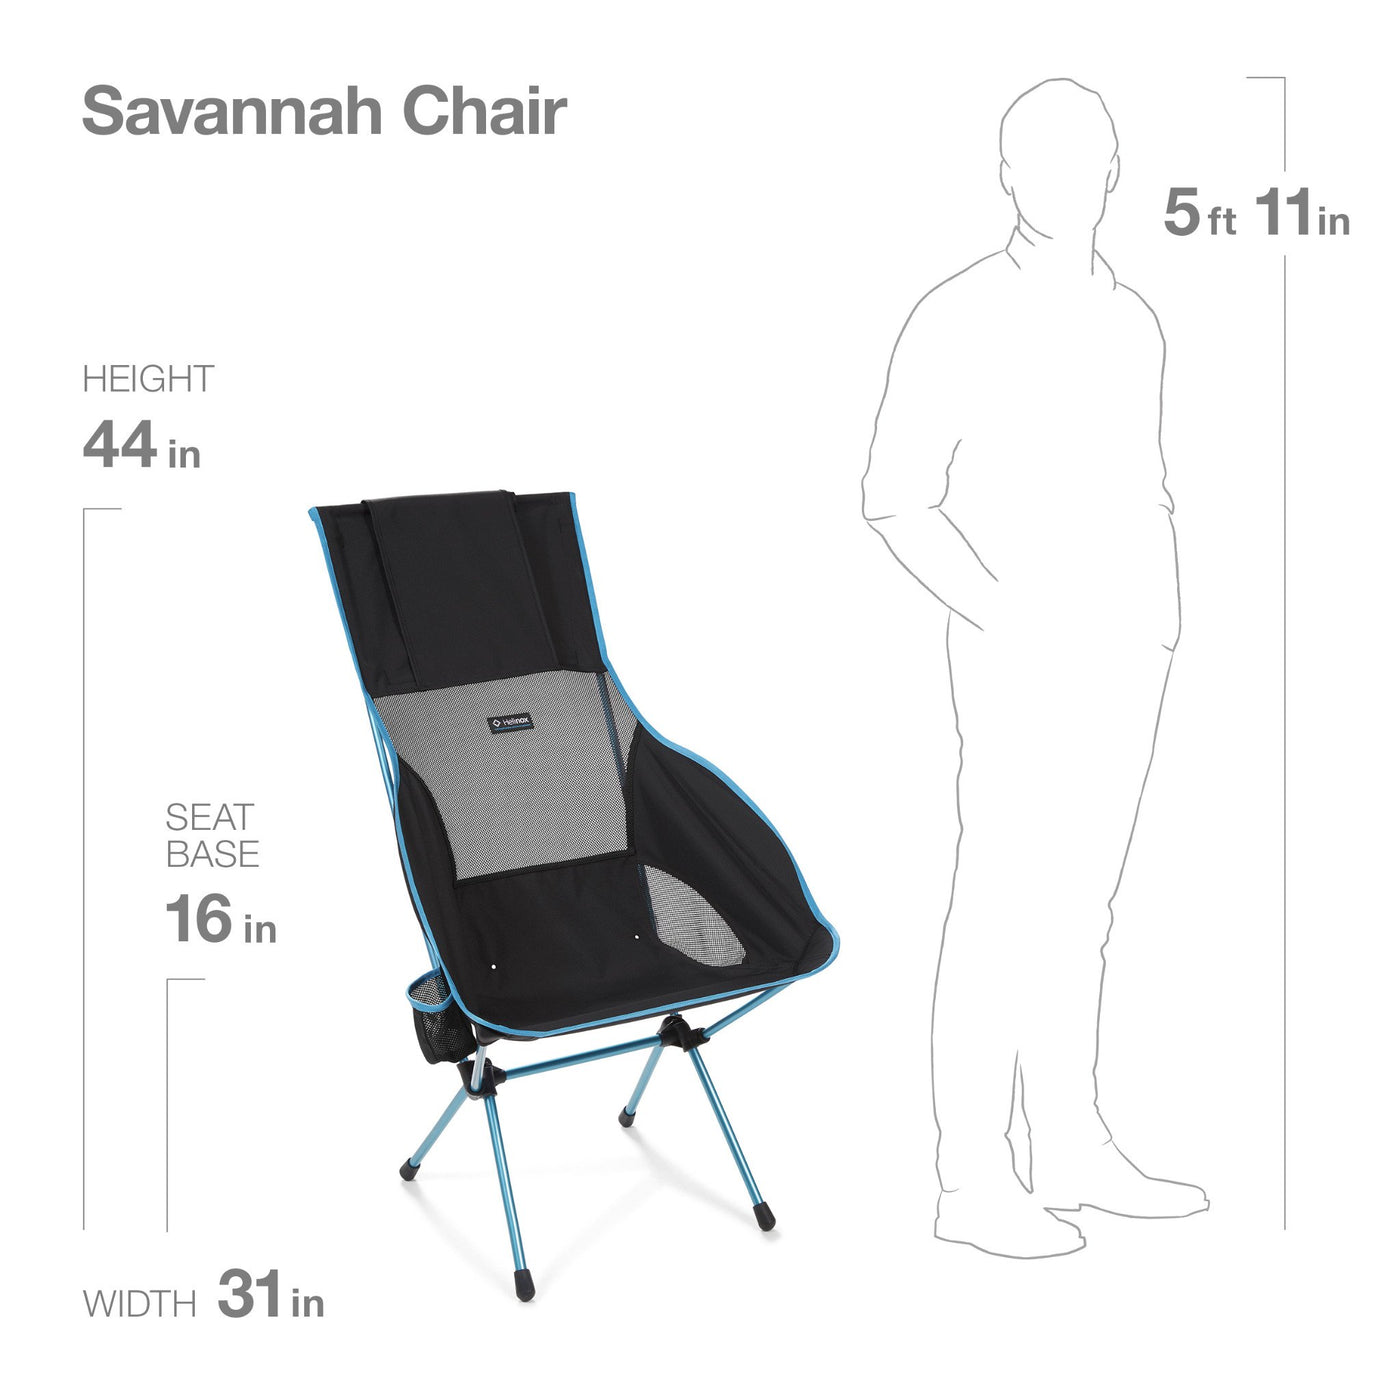 Savanna Chair by Helinox